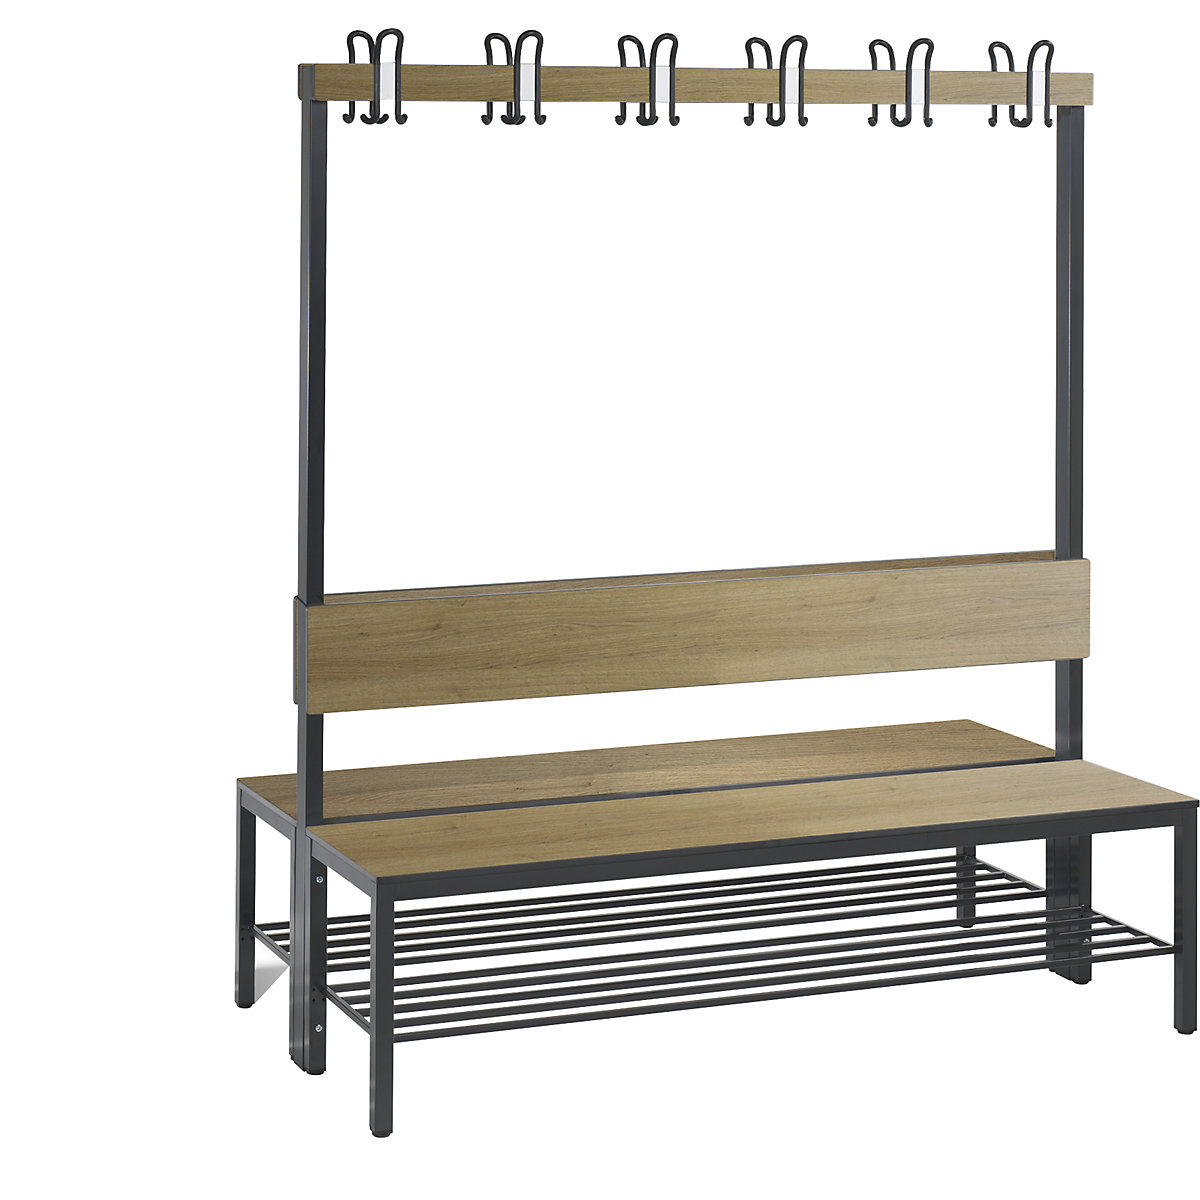 BASIC PLUS cloakroom bench, double sided – C+P, seat HPL, hook rail, shoe rack, length 1500 mm, oak finish-3